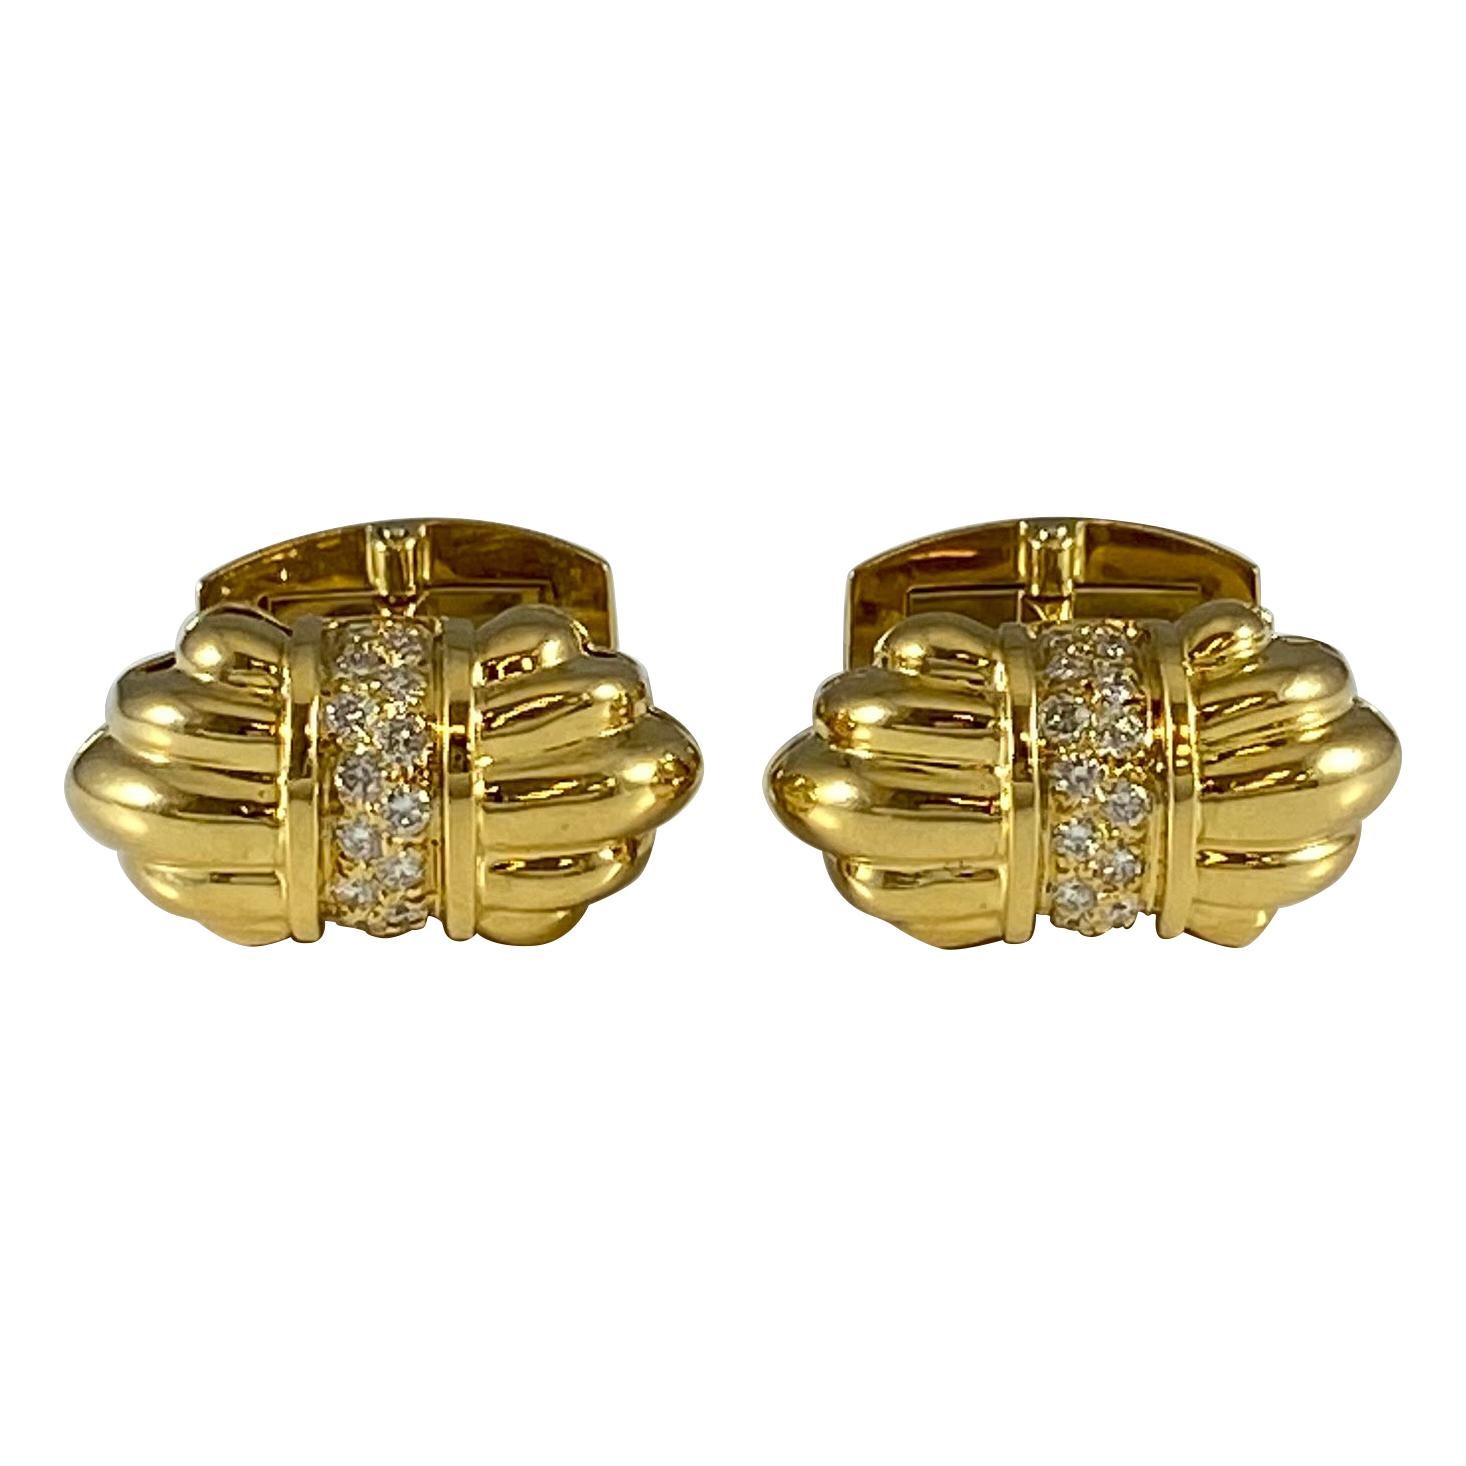 Hammerman Brothers Royal Ascot Diamond Cufflinks For Sale